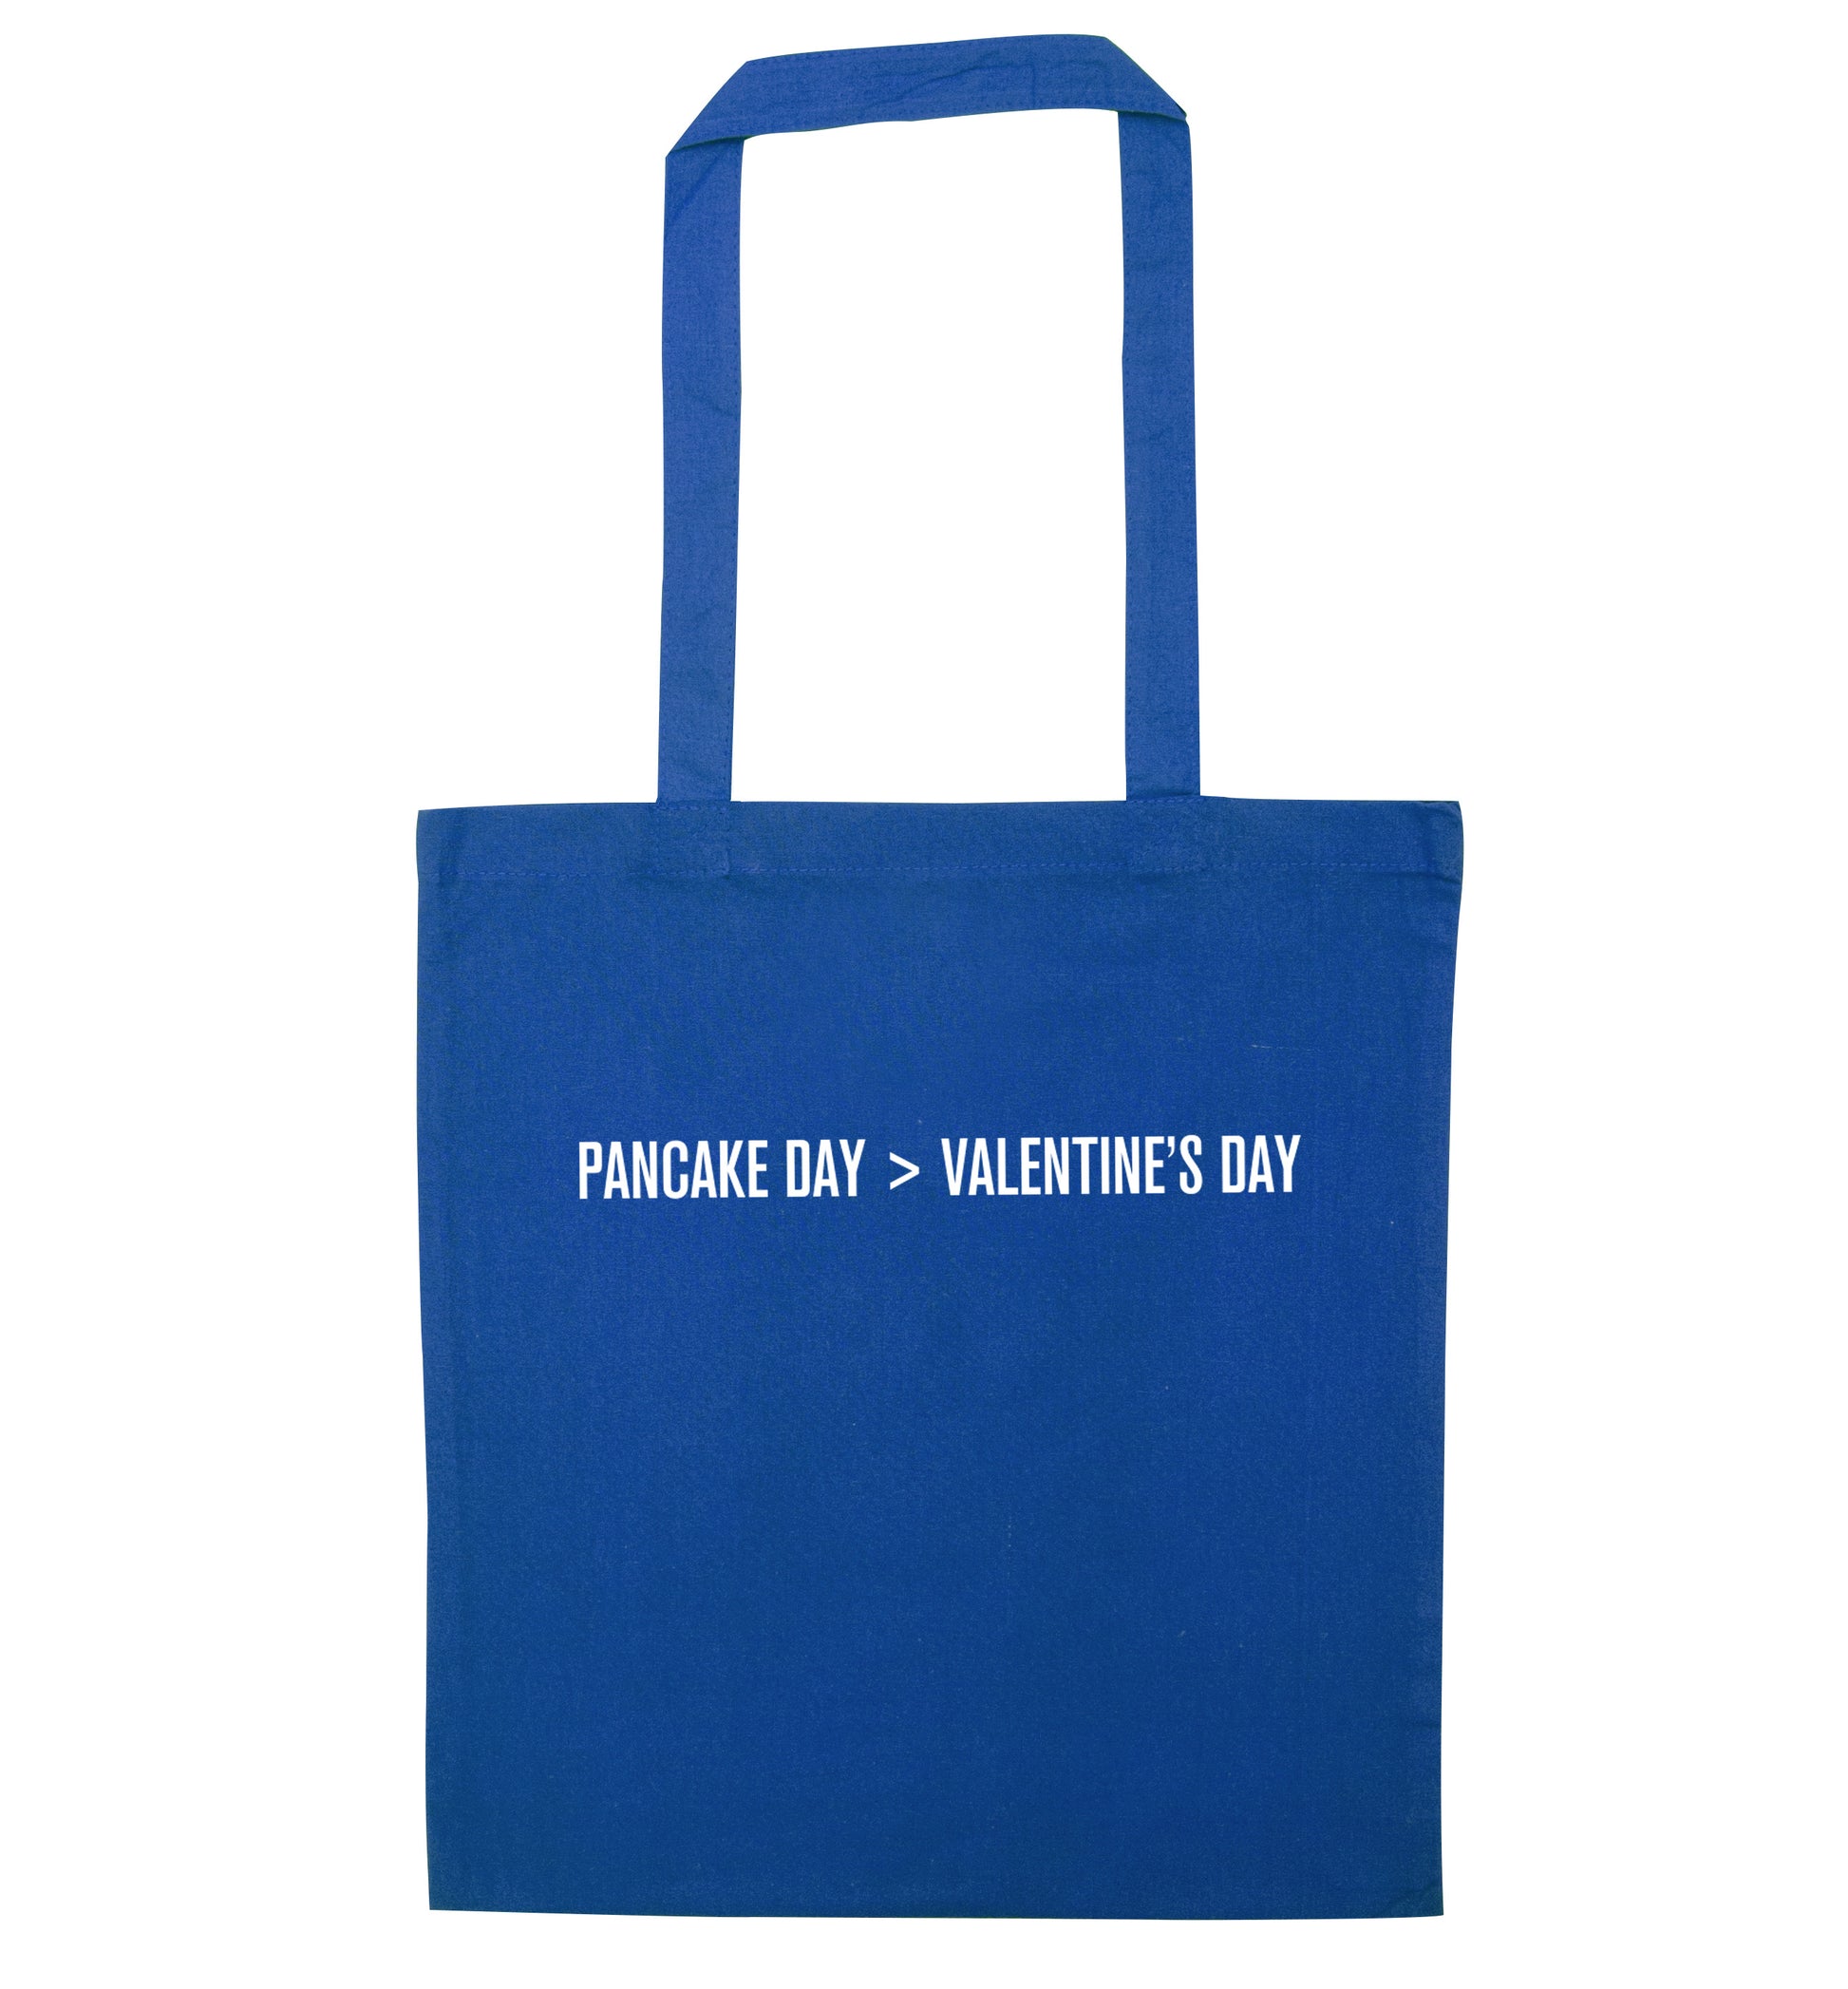 Valentine's day > pancake day blue tote bag